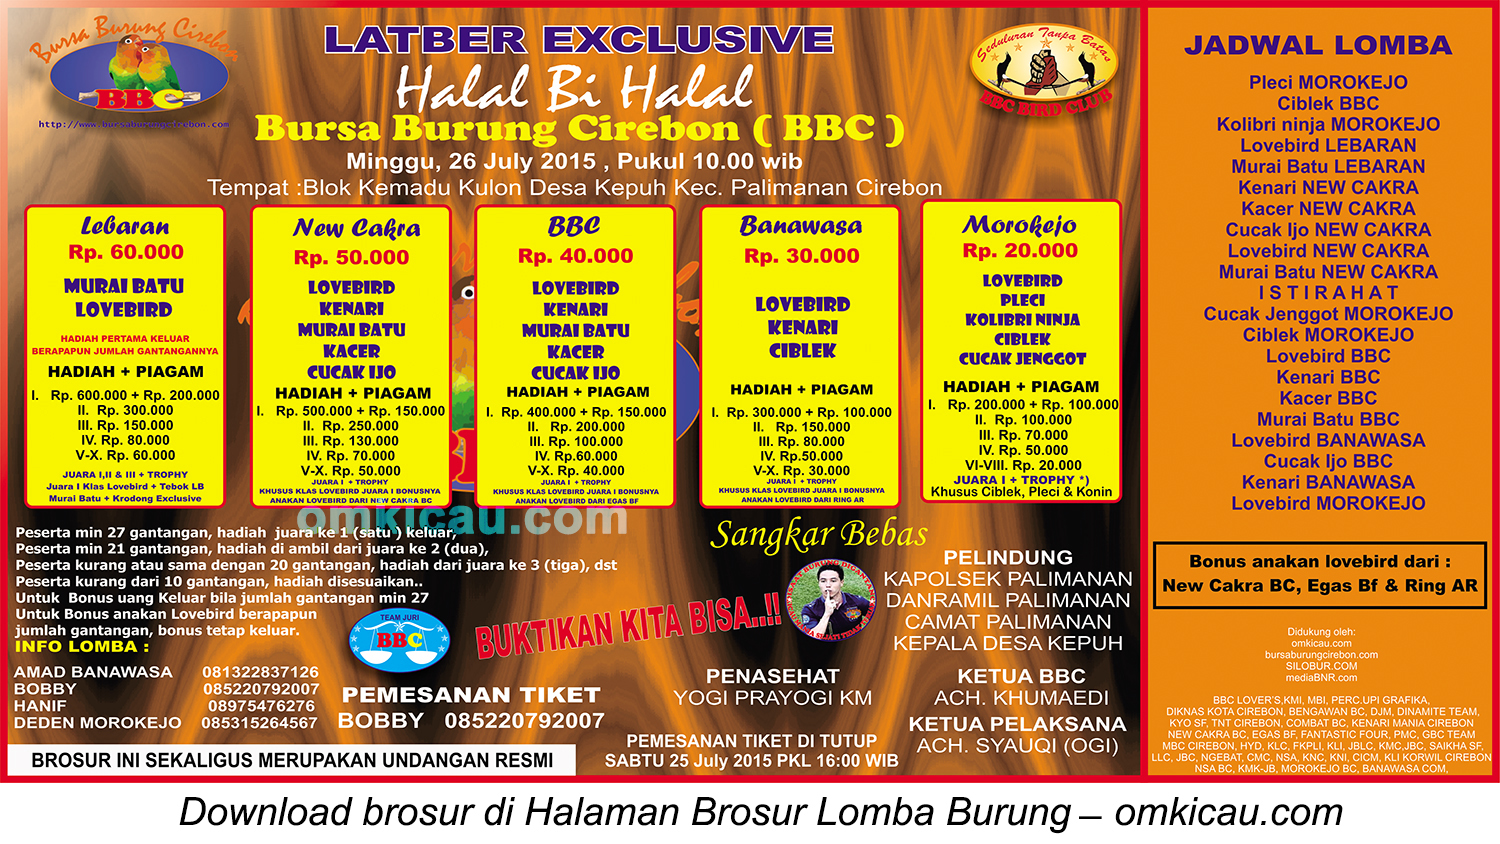 Brosur Latber Halal Biihalal BBC, Cirebon, 26 Juli 2015